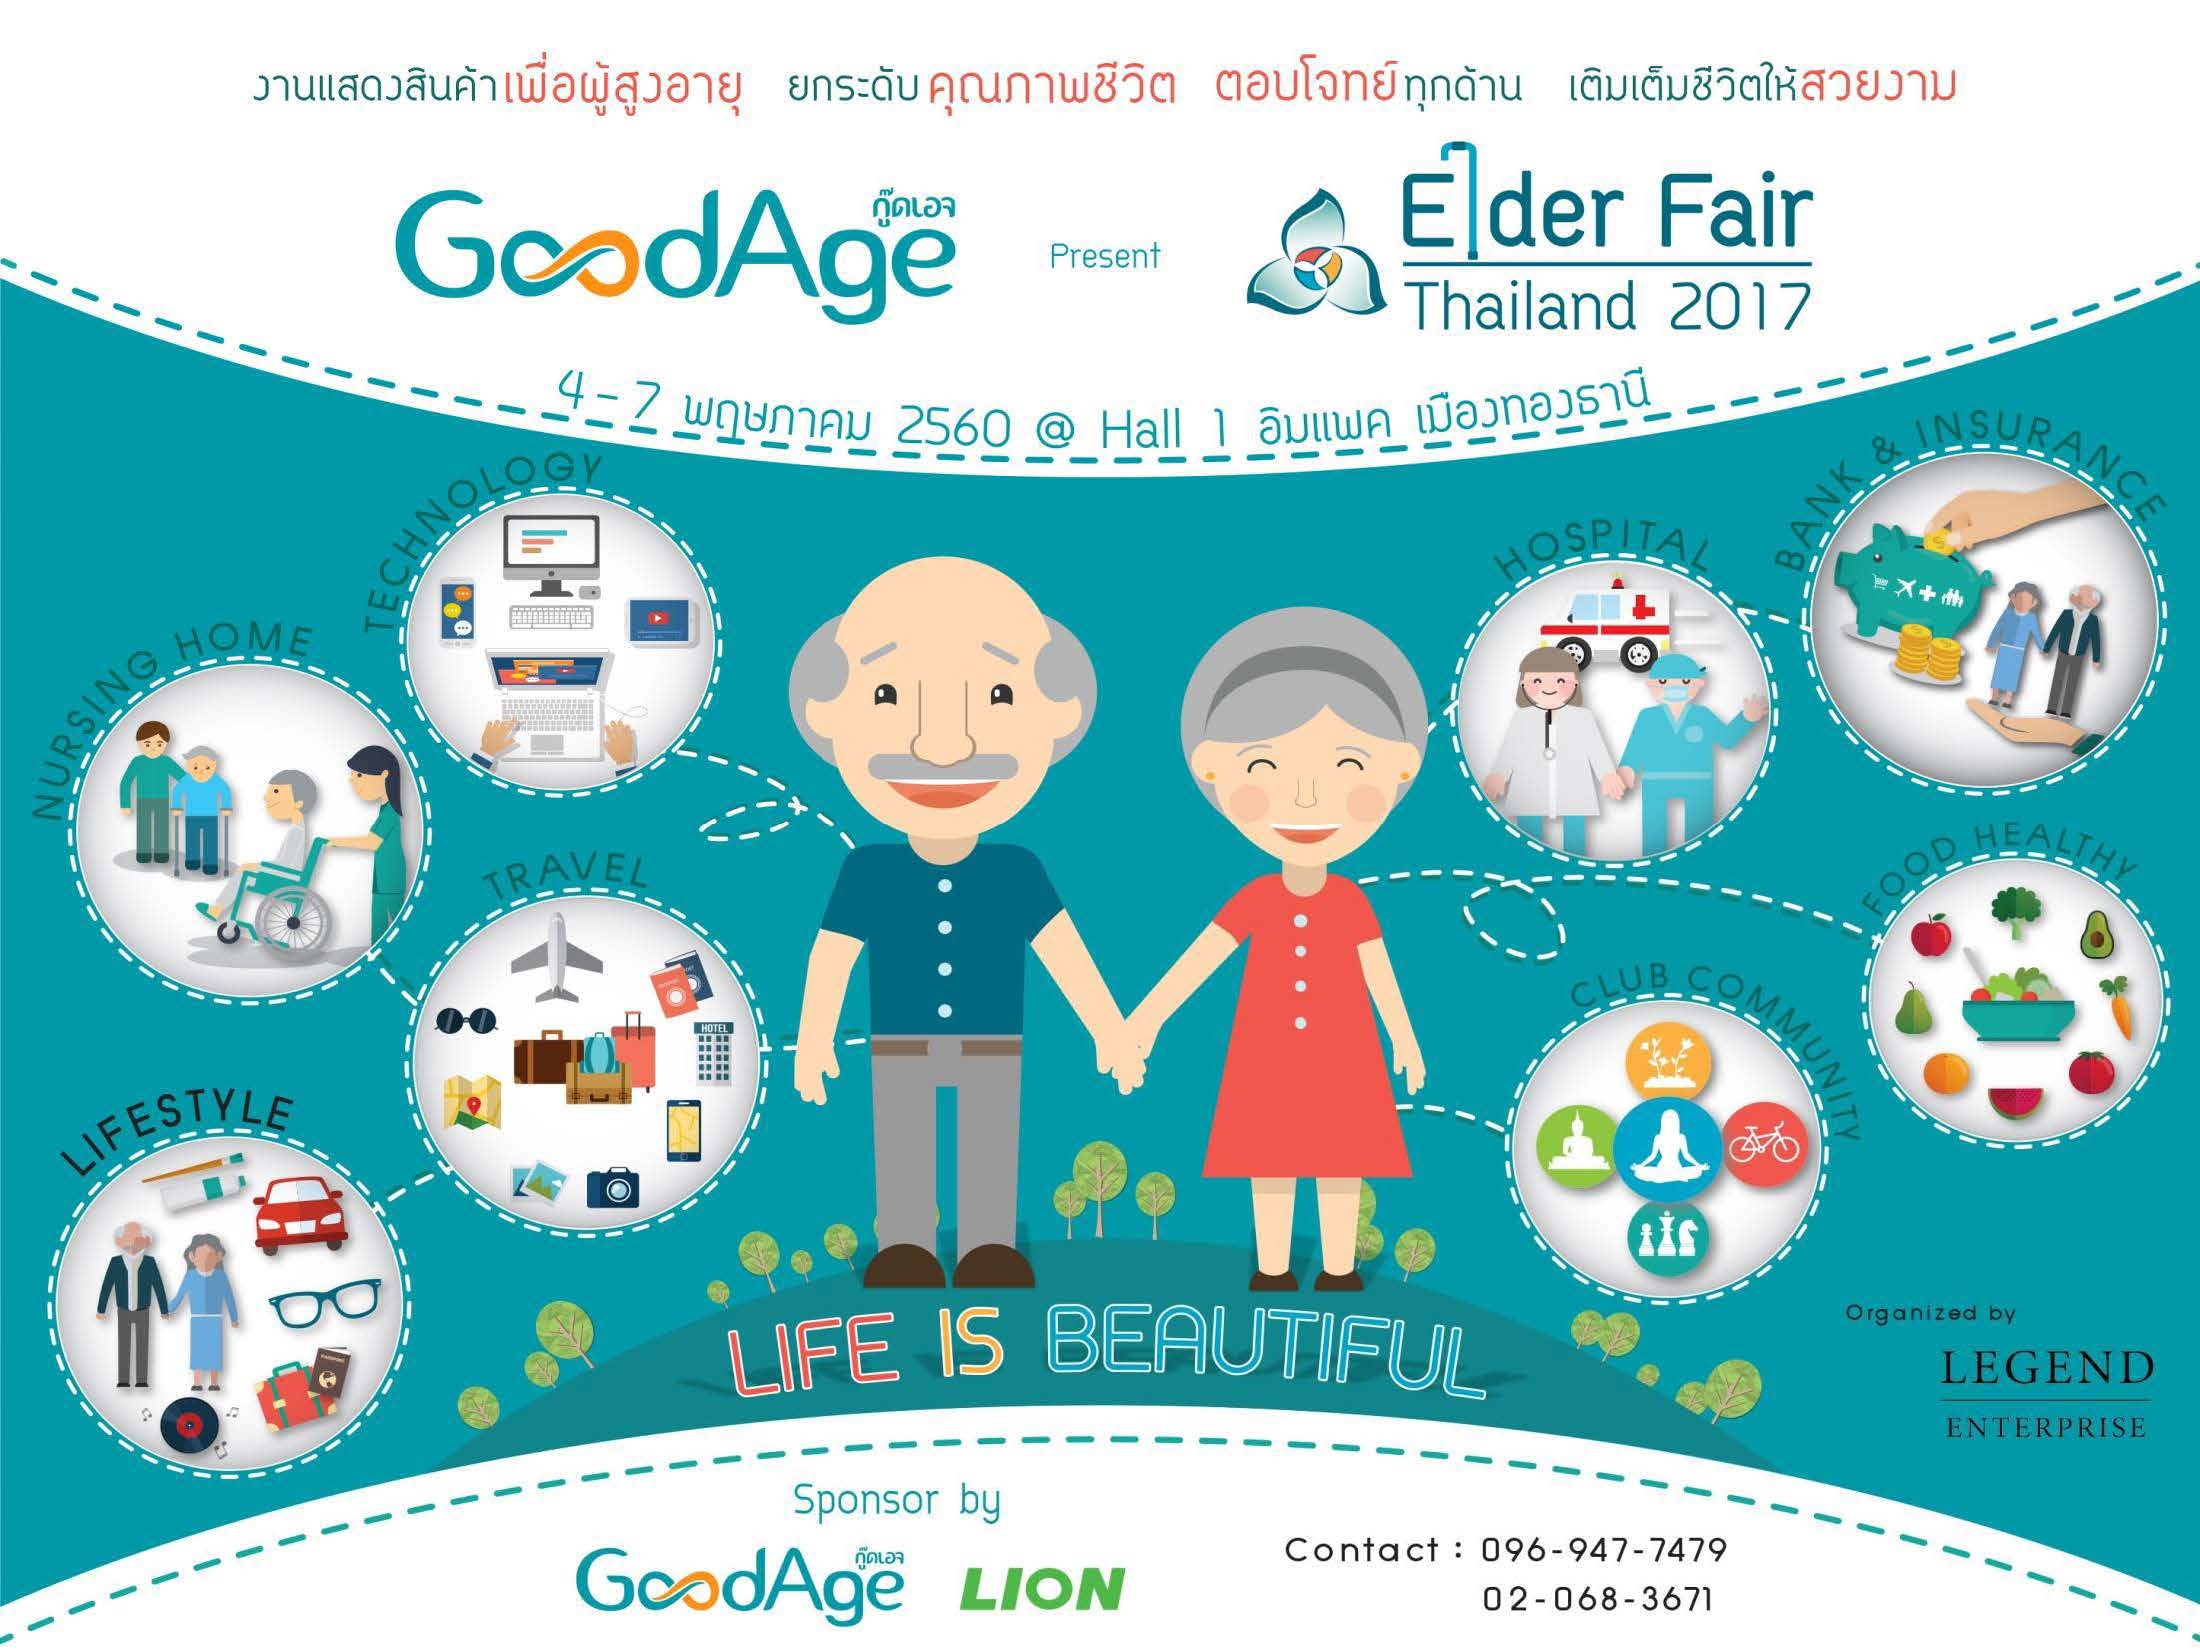 Elder Fair Thailand 2017